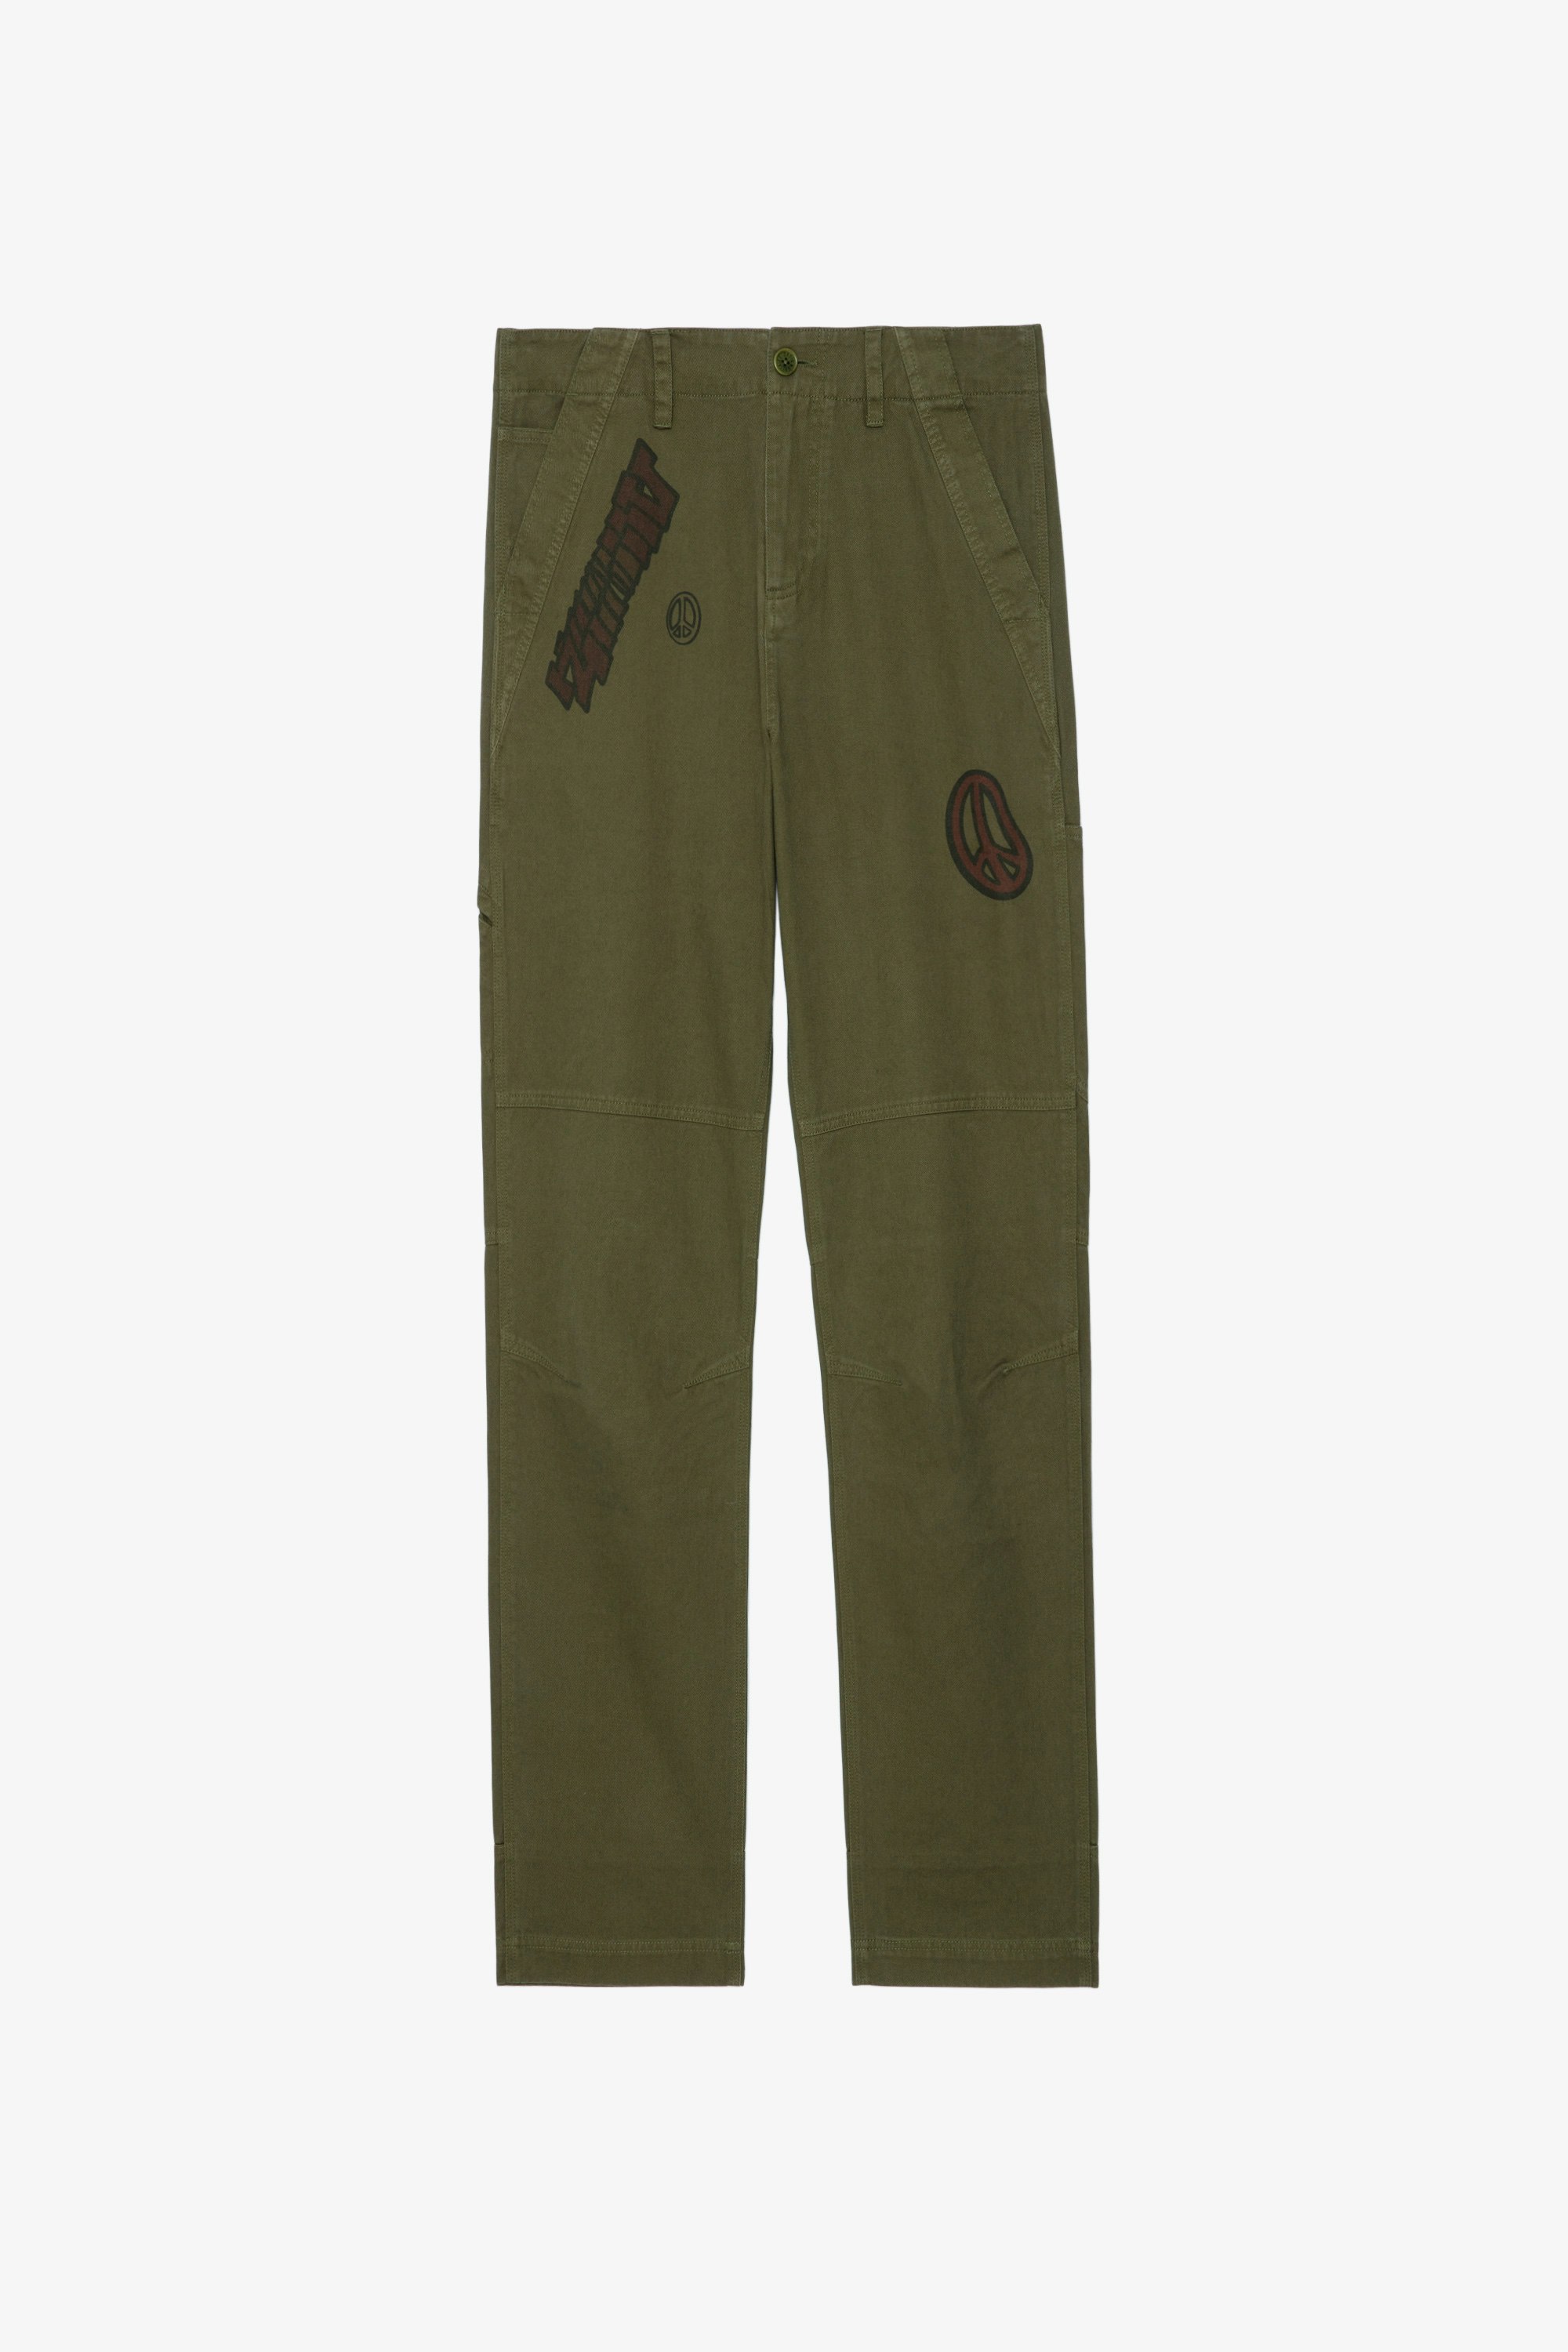 Park Trousers Men’s khaki cotton military-style pants